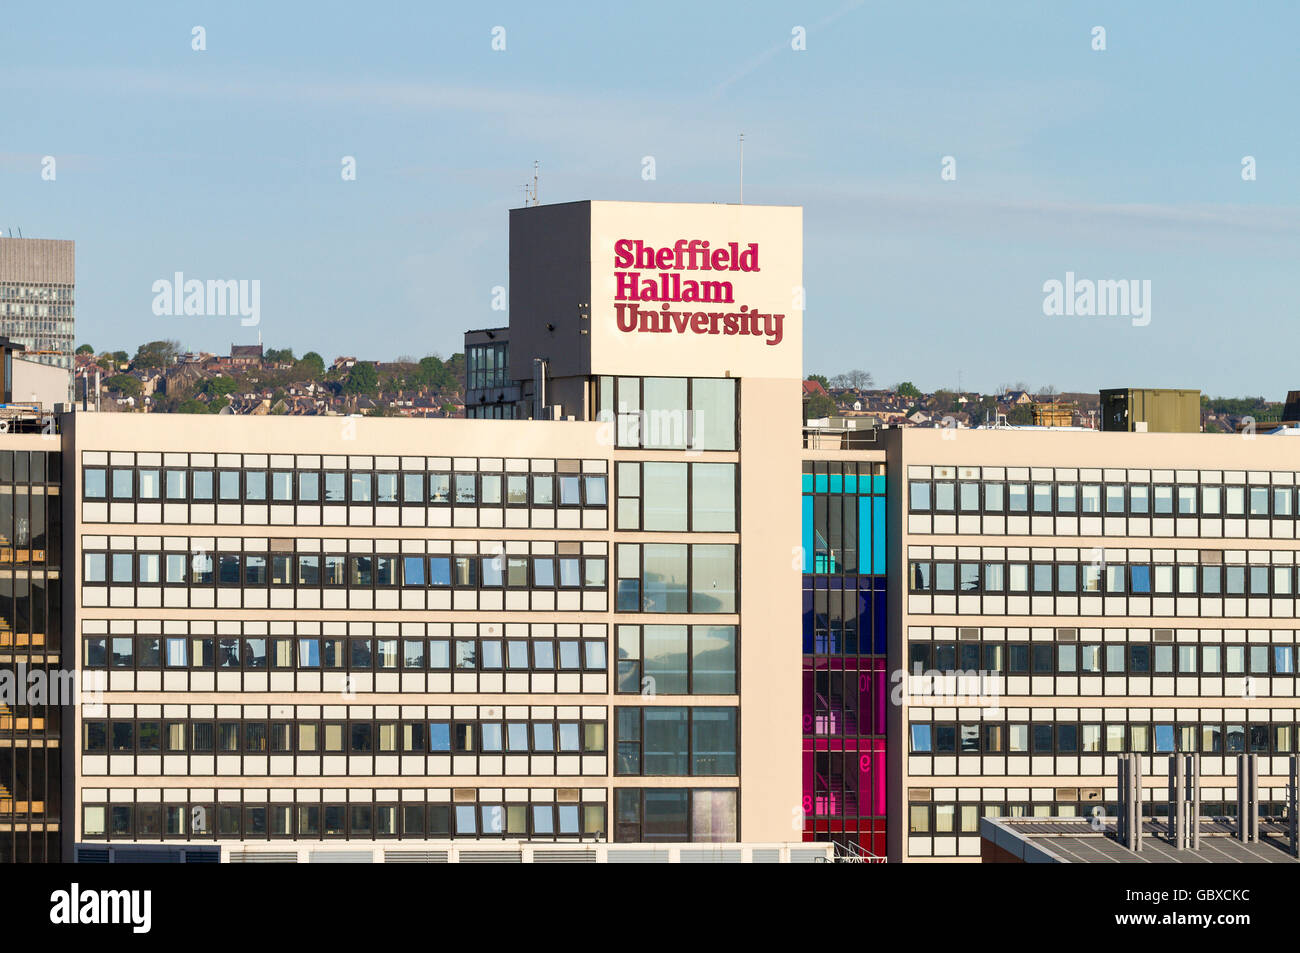 Sheffield Hallam University building, England Stock Photo